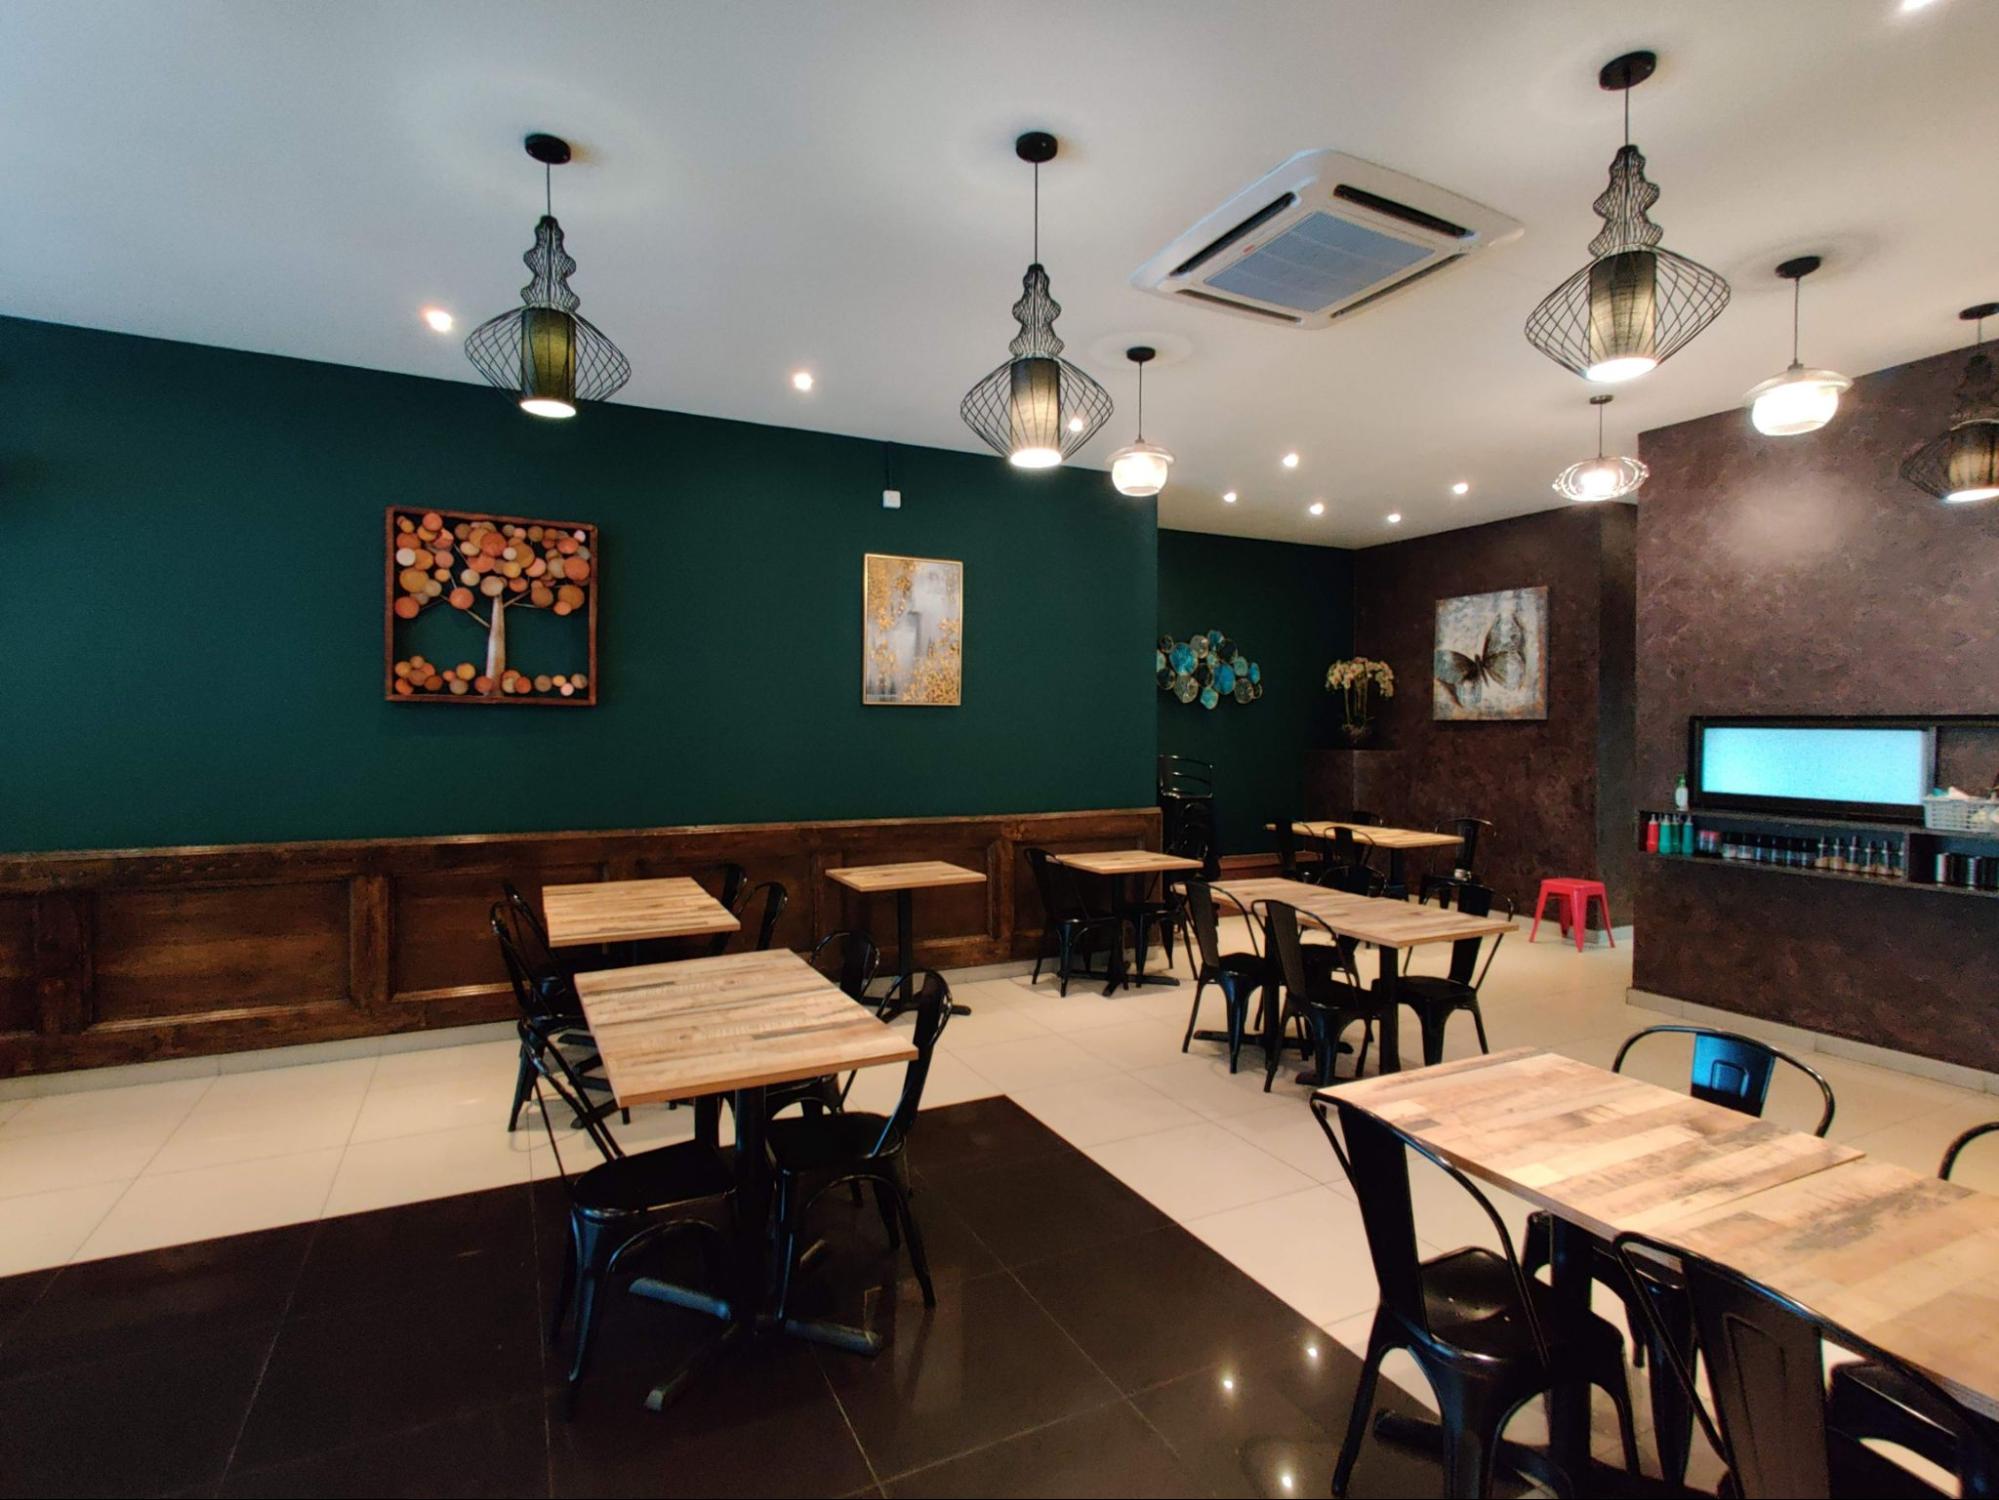 Sips & Bites Cafe in Shah Alam